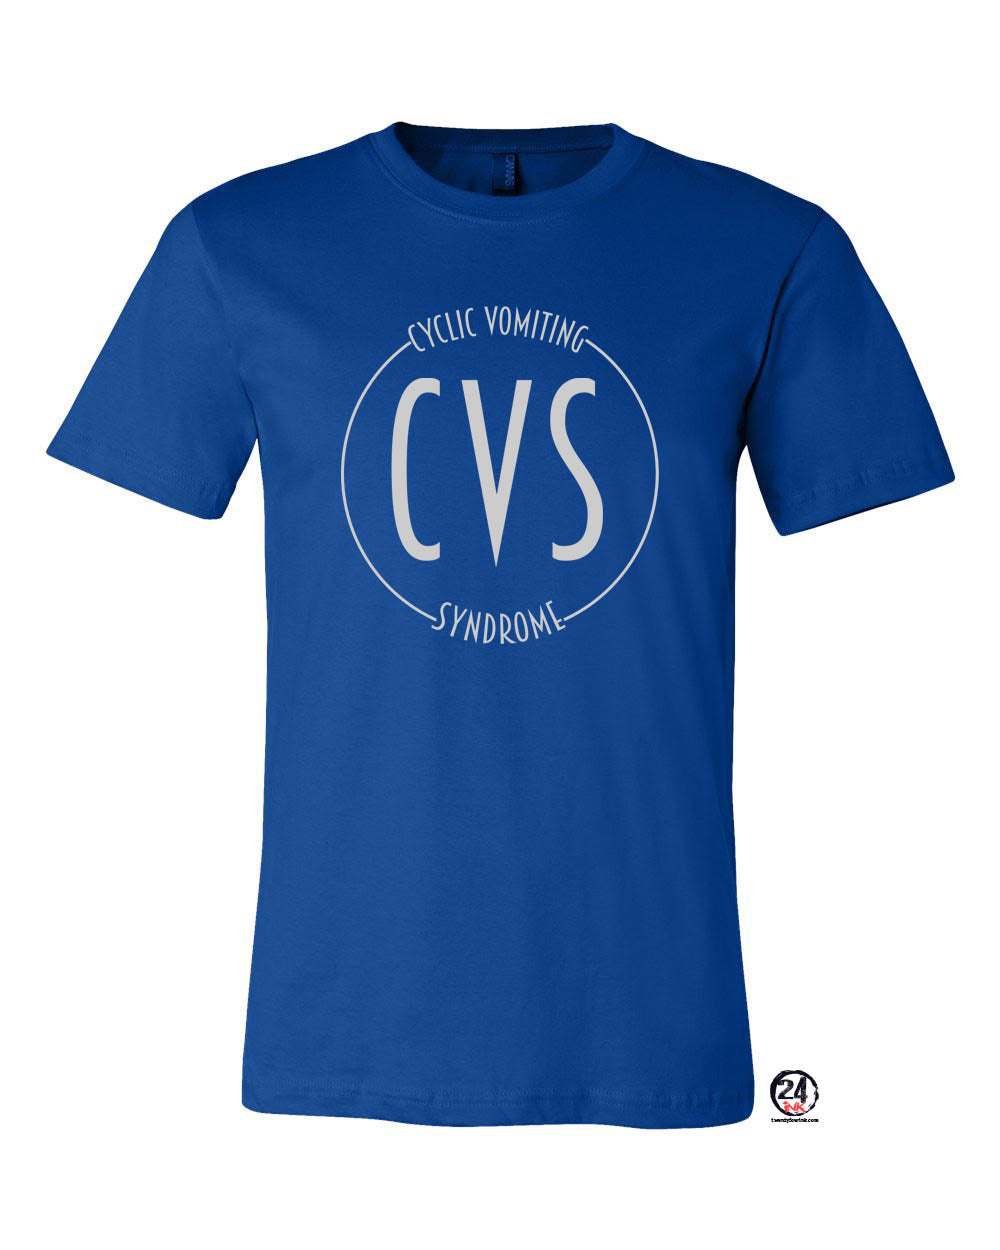 Cyclic Vomiting Syndrome, CVS Awareness T- Shirt